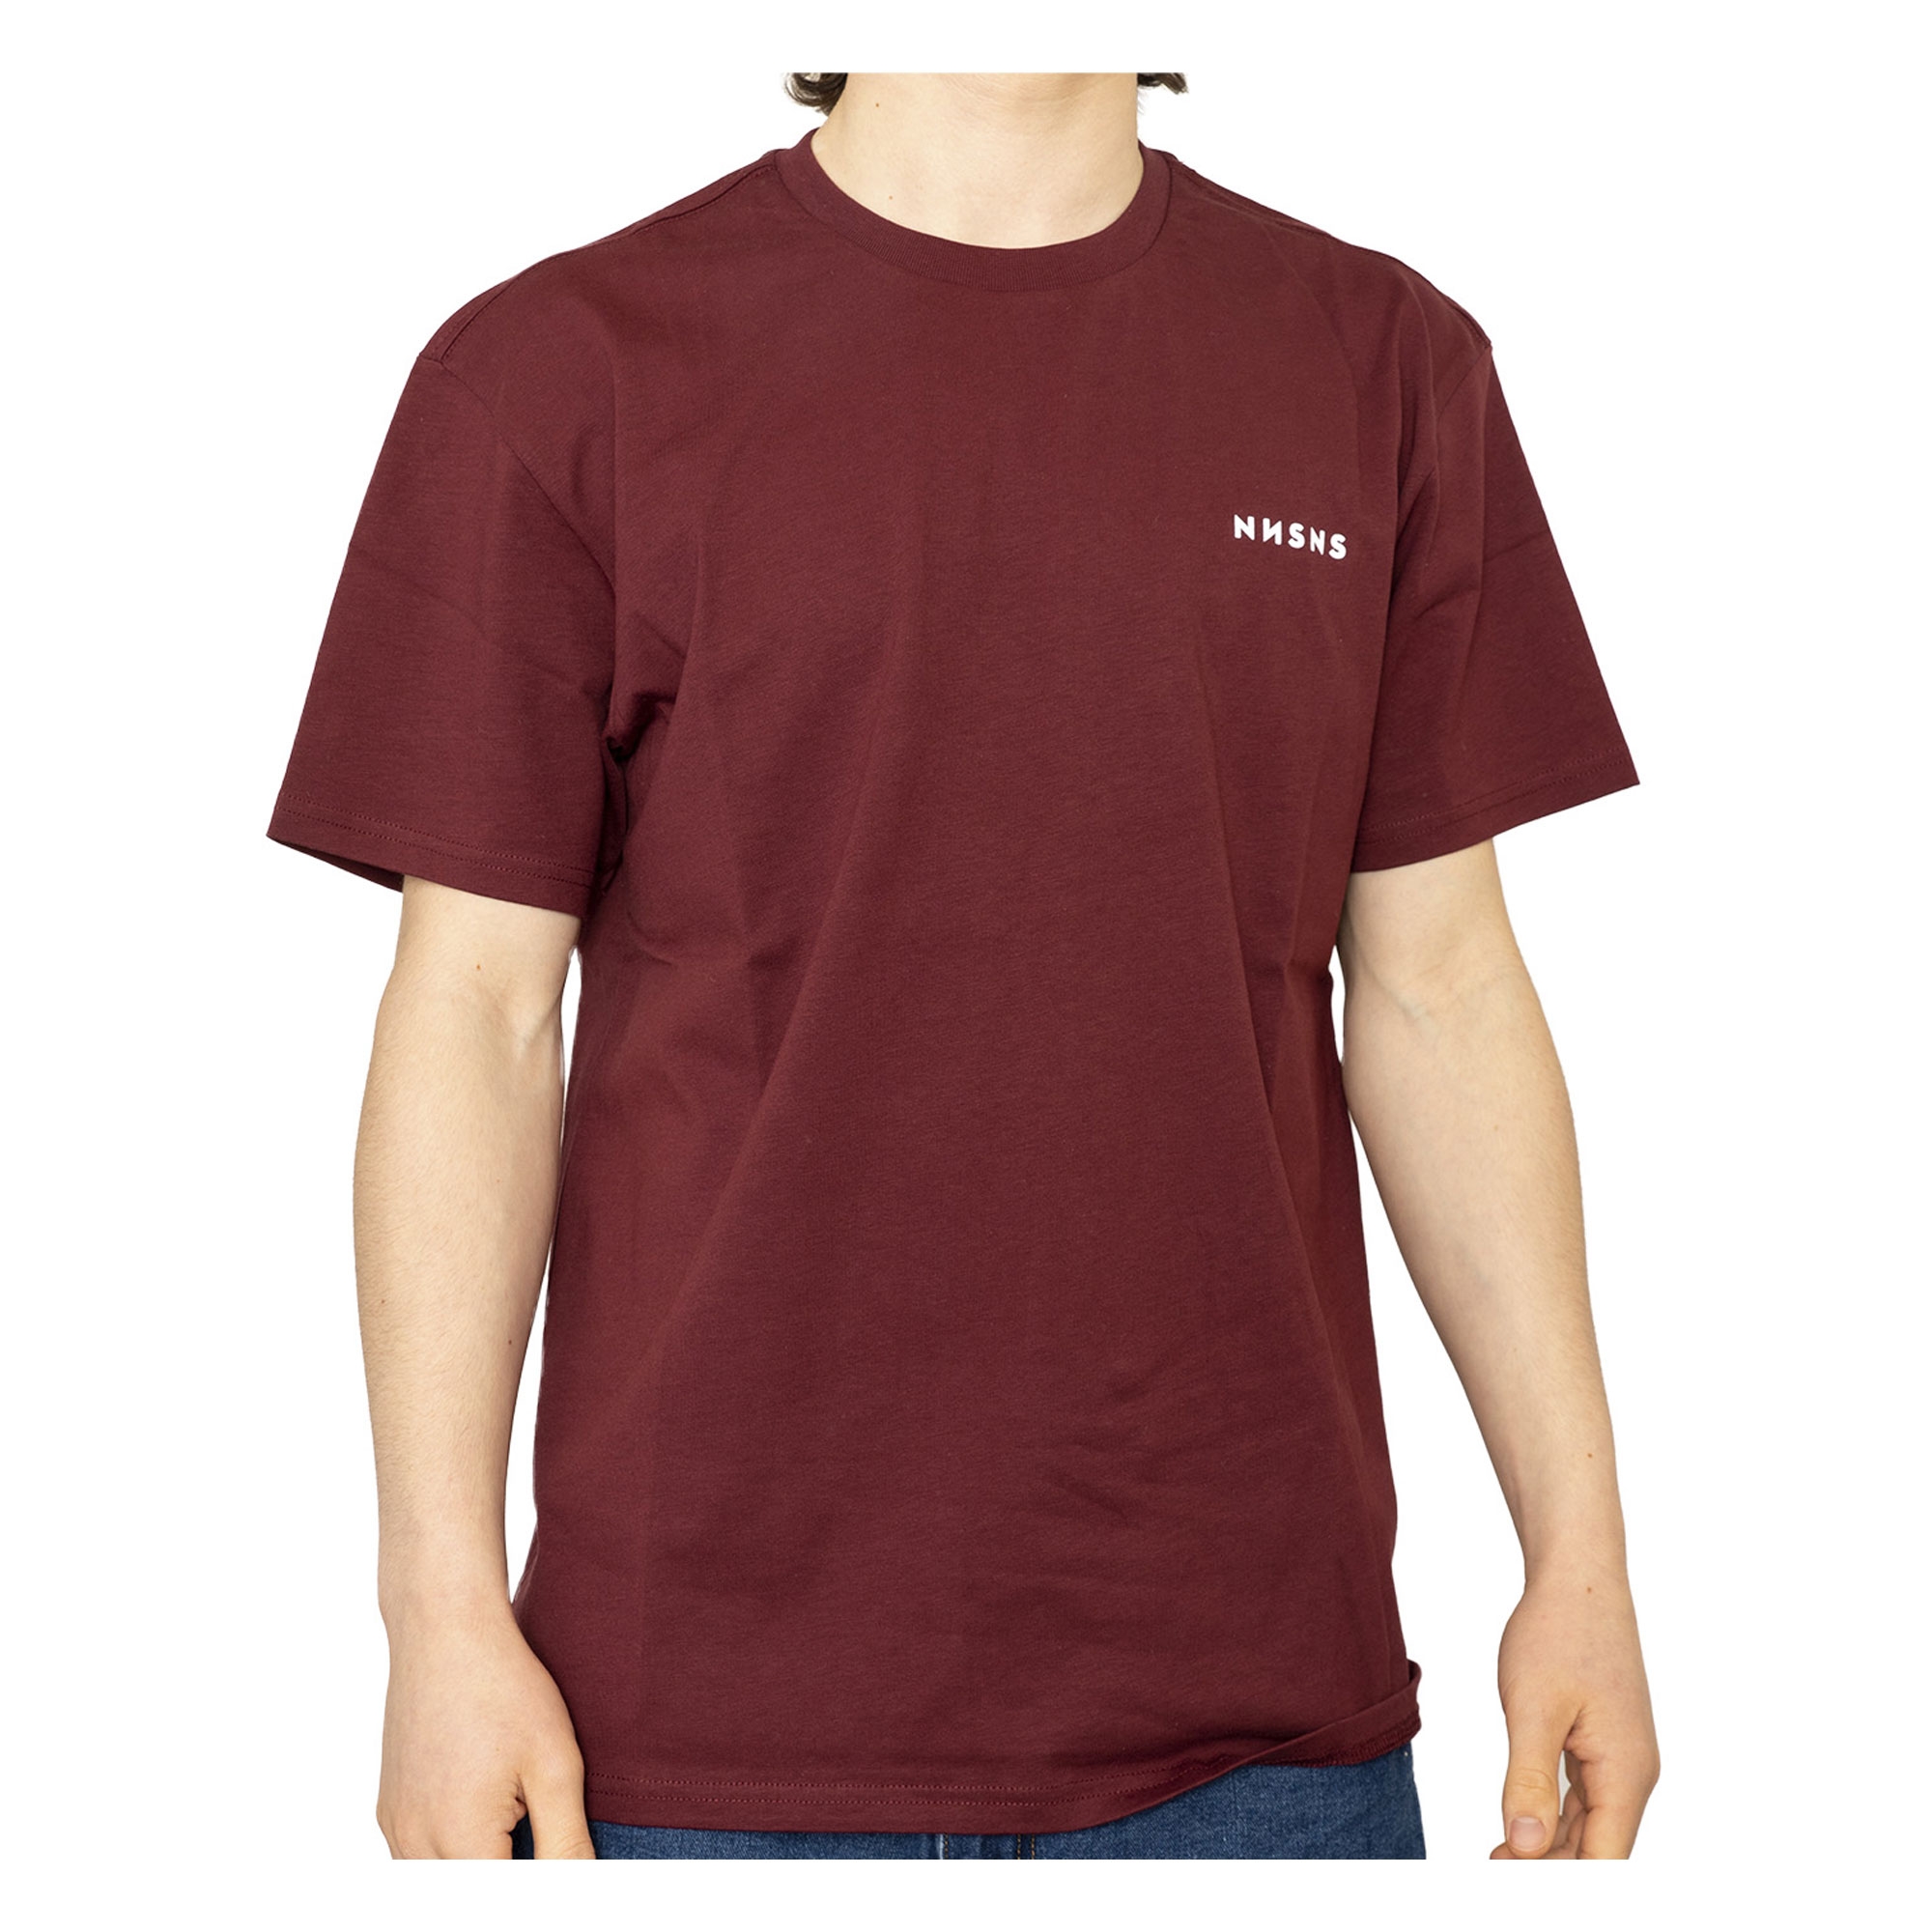 NNSNS T-Shirt HEAD LOGO burgundy